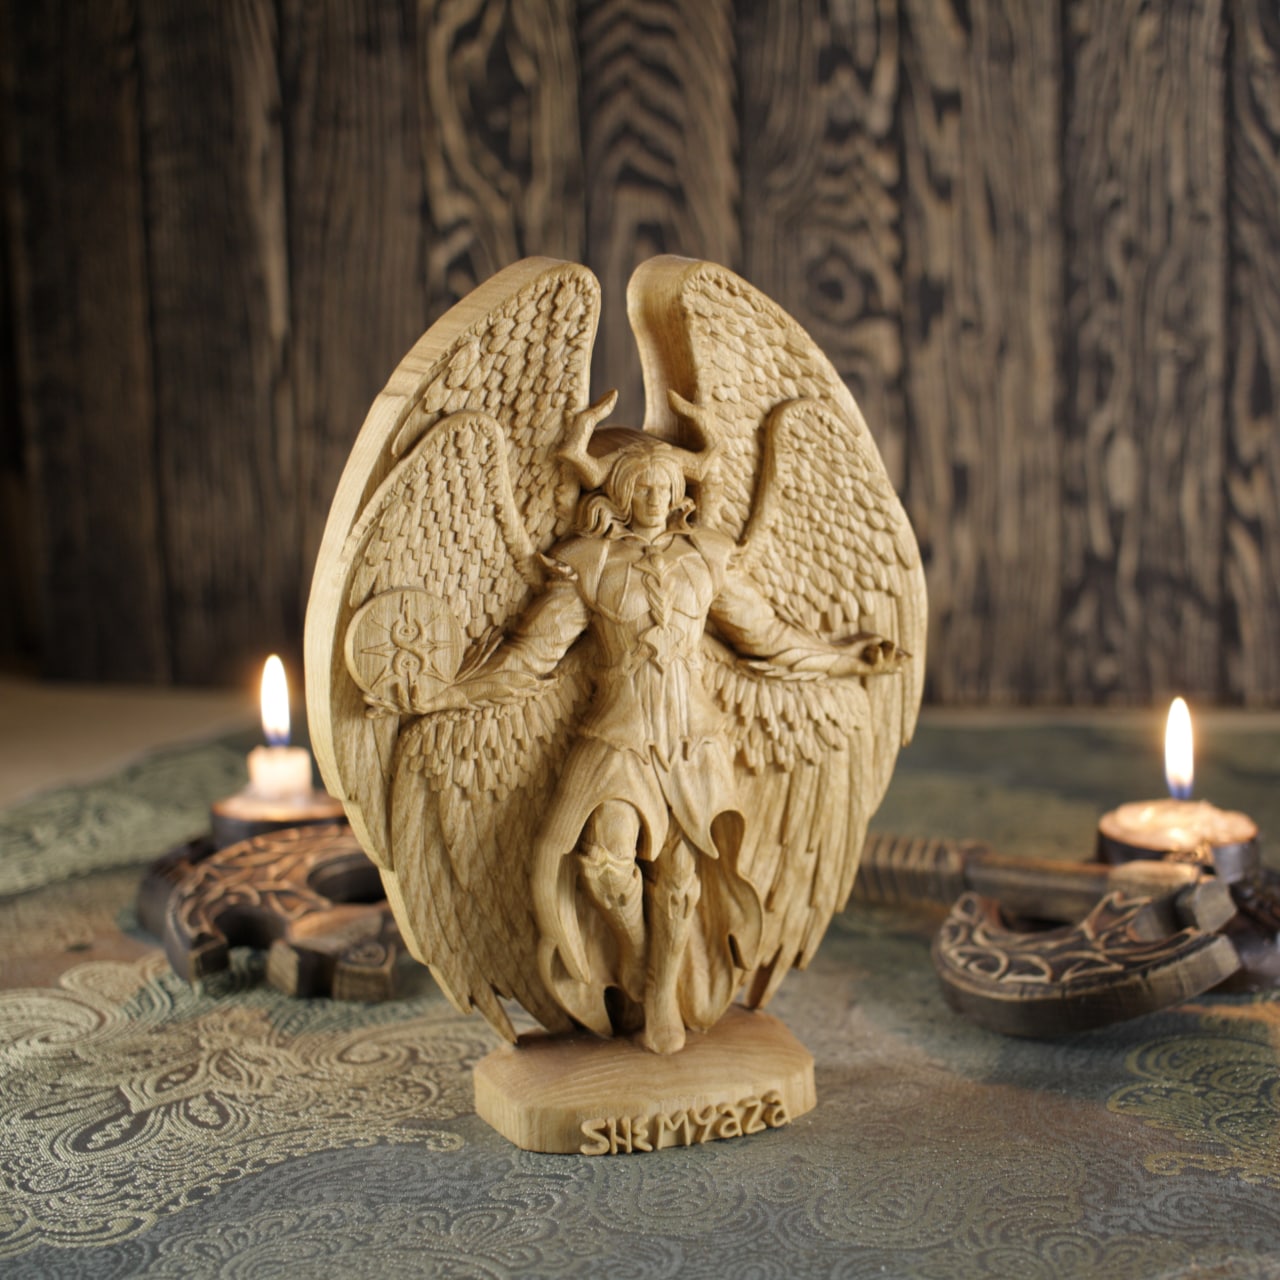 Shemyaza Fallen Angel Statue - The Wooden Satan Figurine